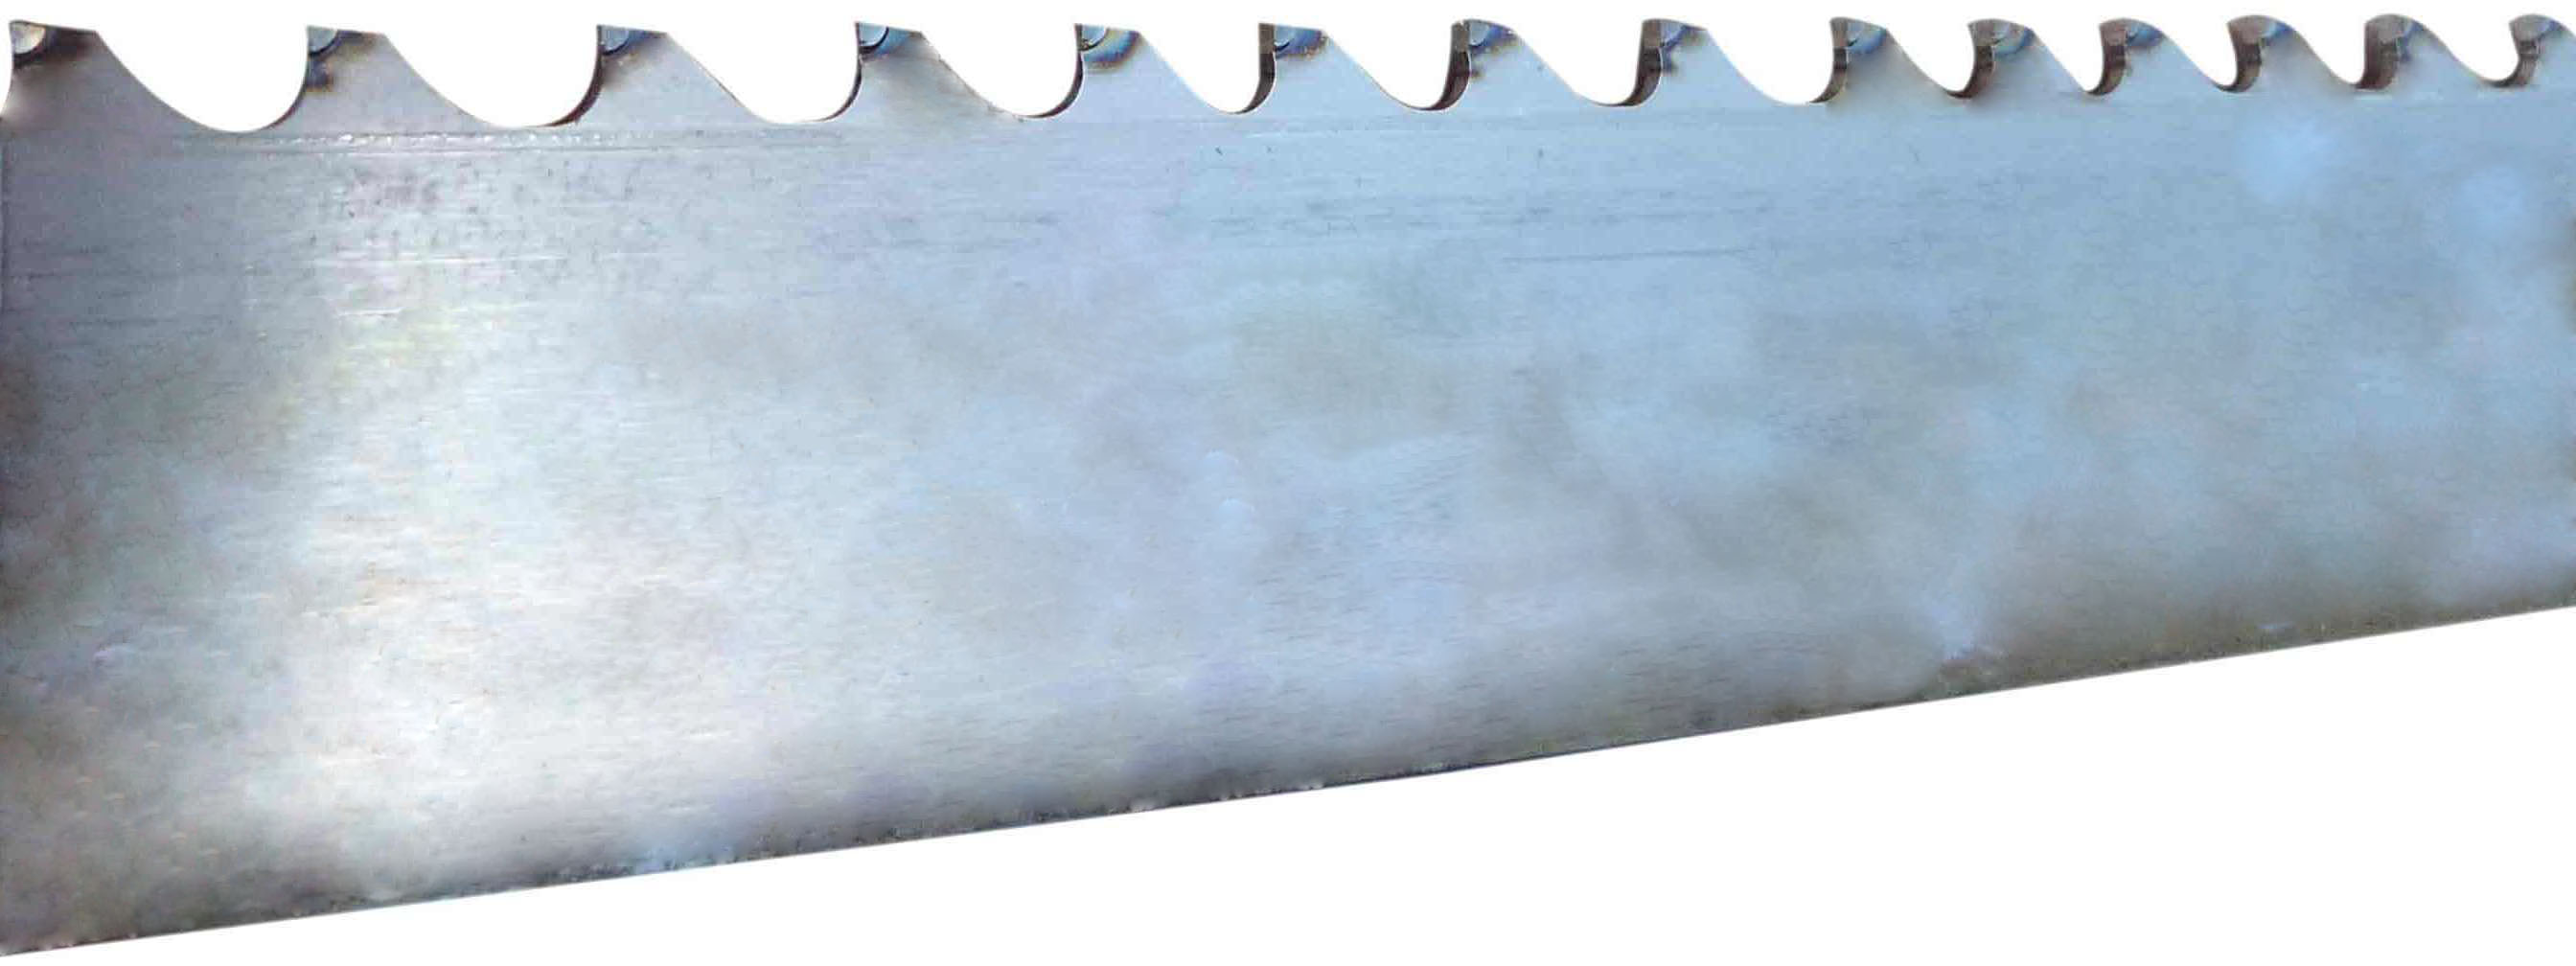 bandsaw-blades-bimetal-hm-titan-carbide-34mm-x-2-3tpi-metal-cutting.jpg